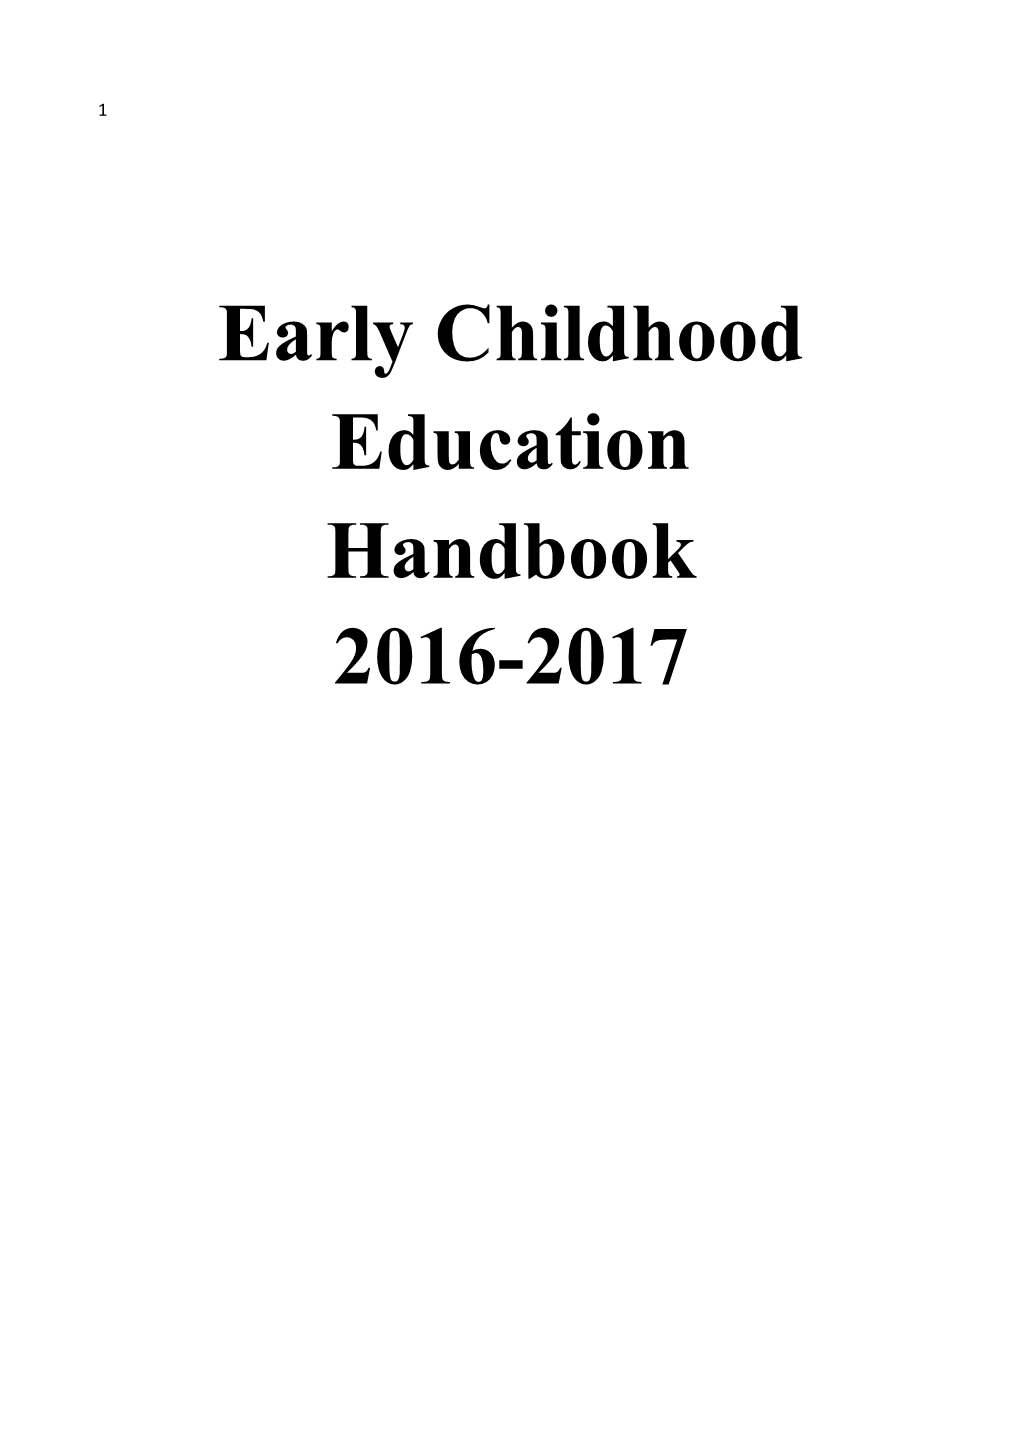 Early Childhood Education Handbook